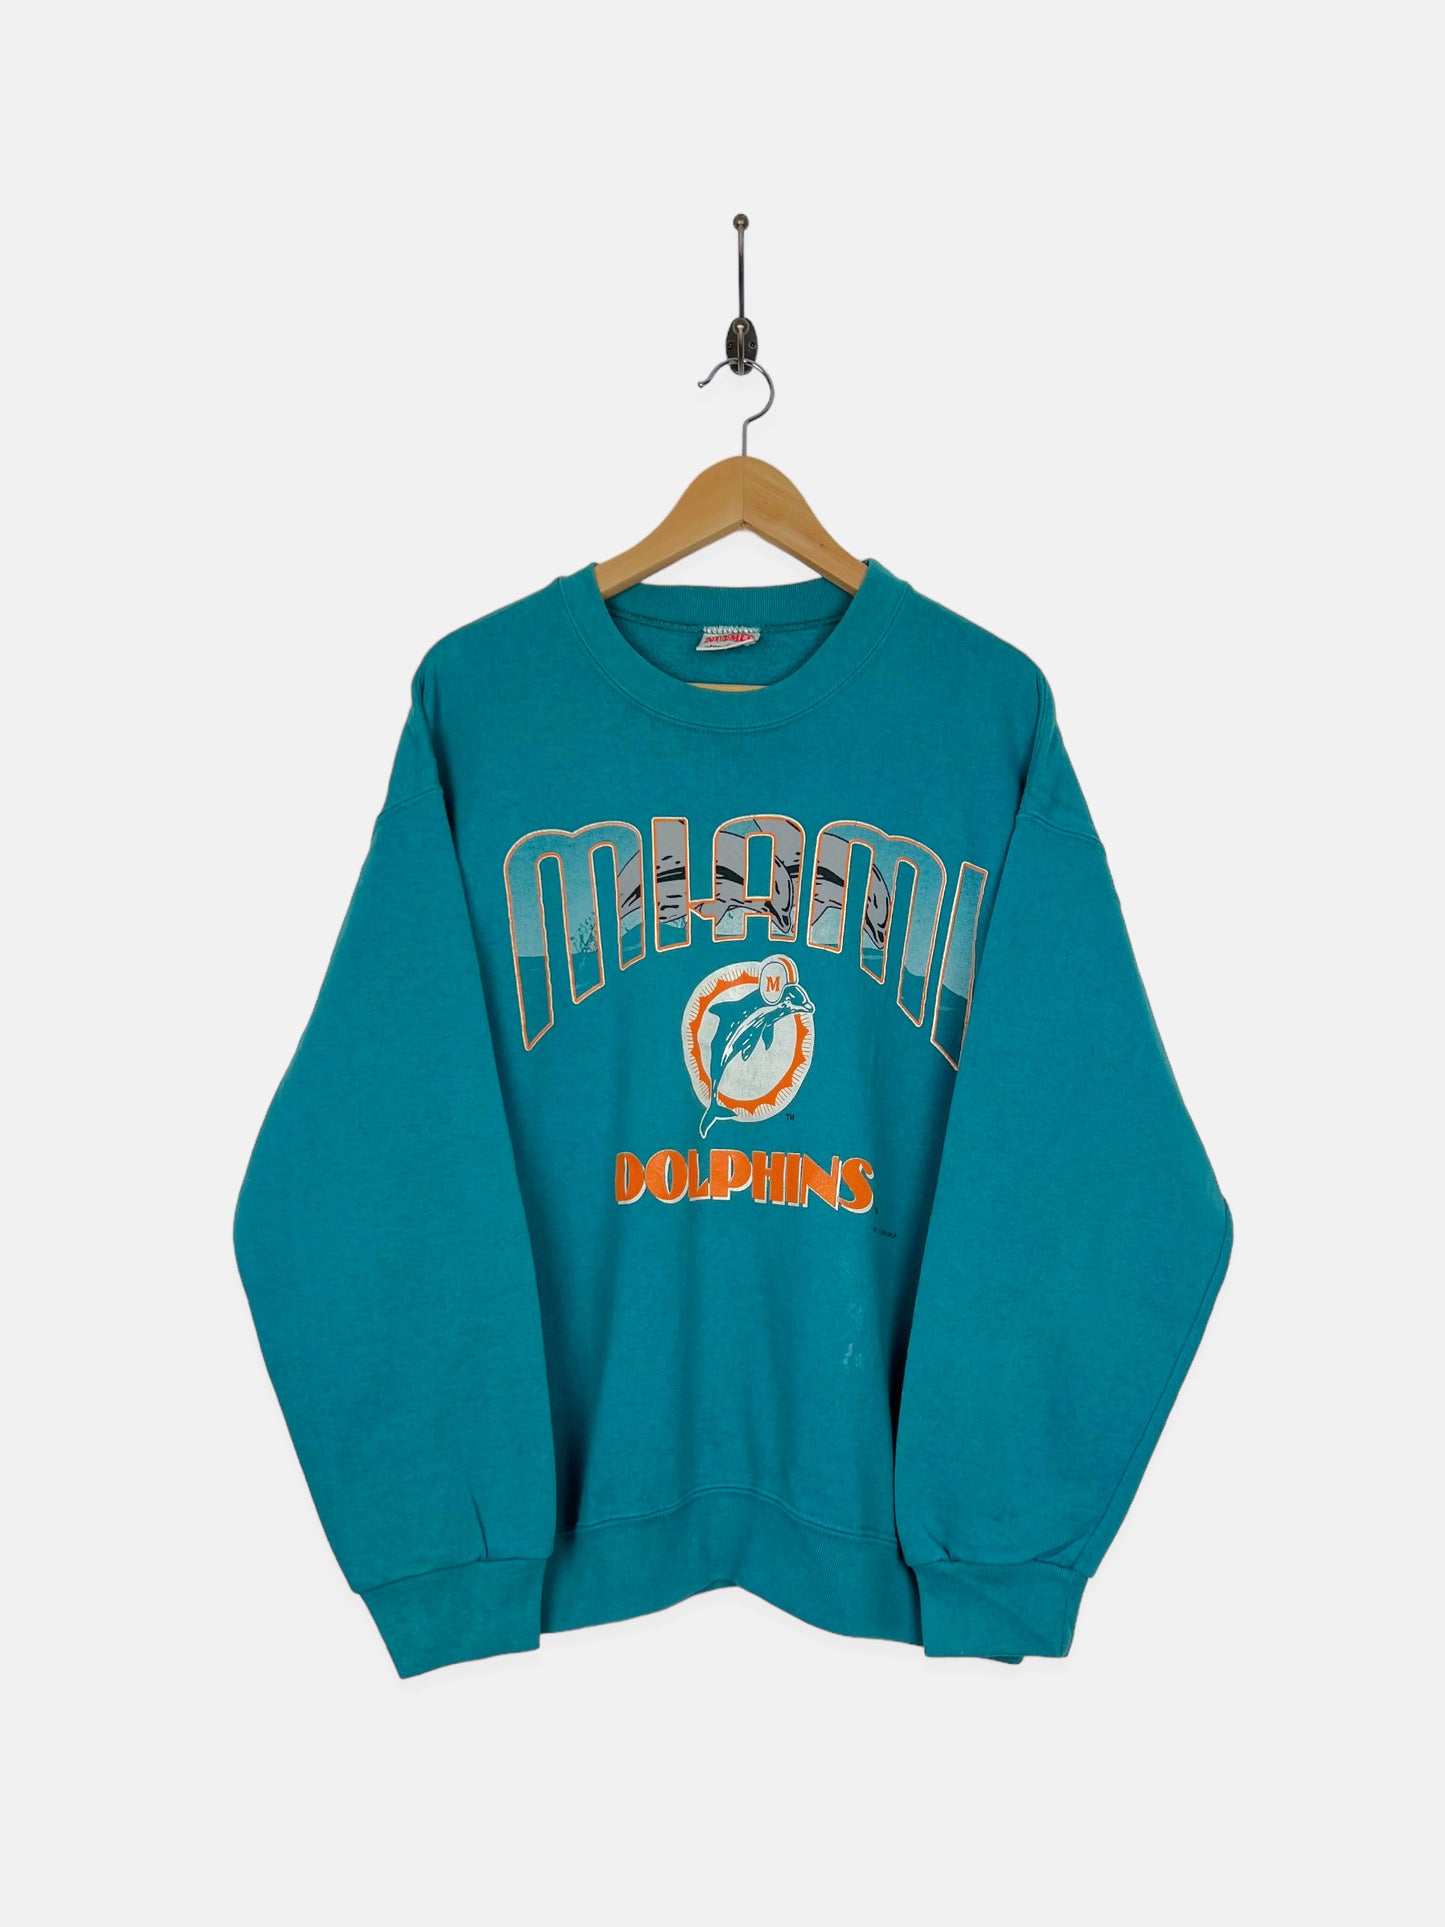 1993 Miami Dolphins NFL USA Made Vintage Sweatshirt Size M-L